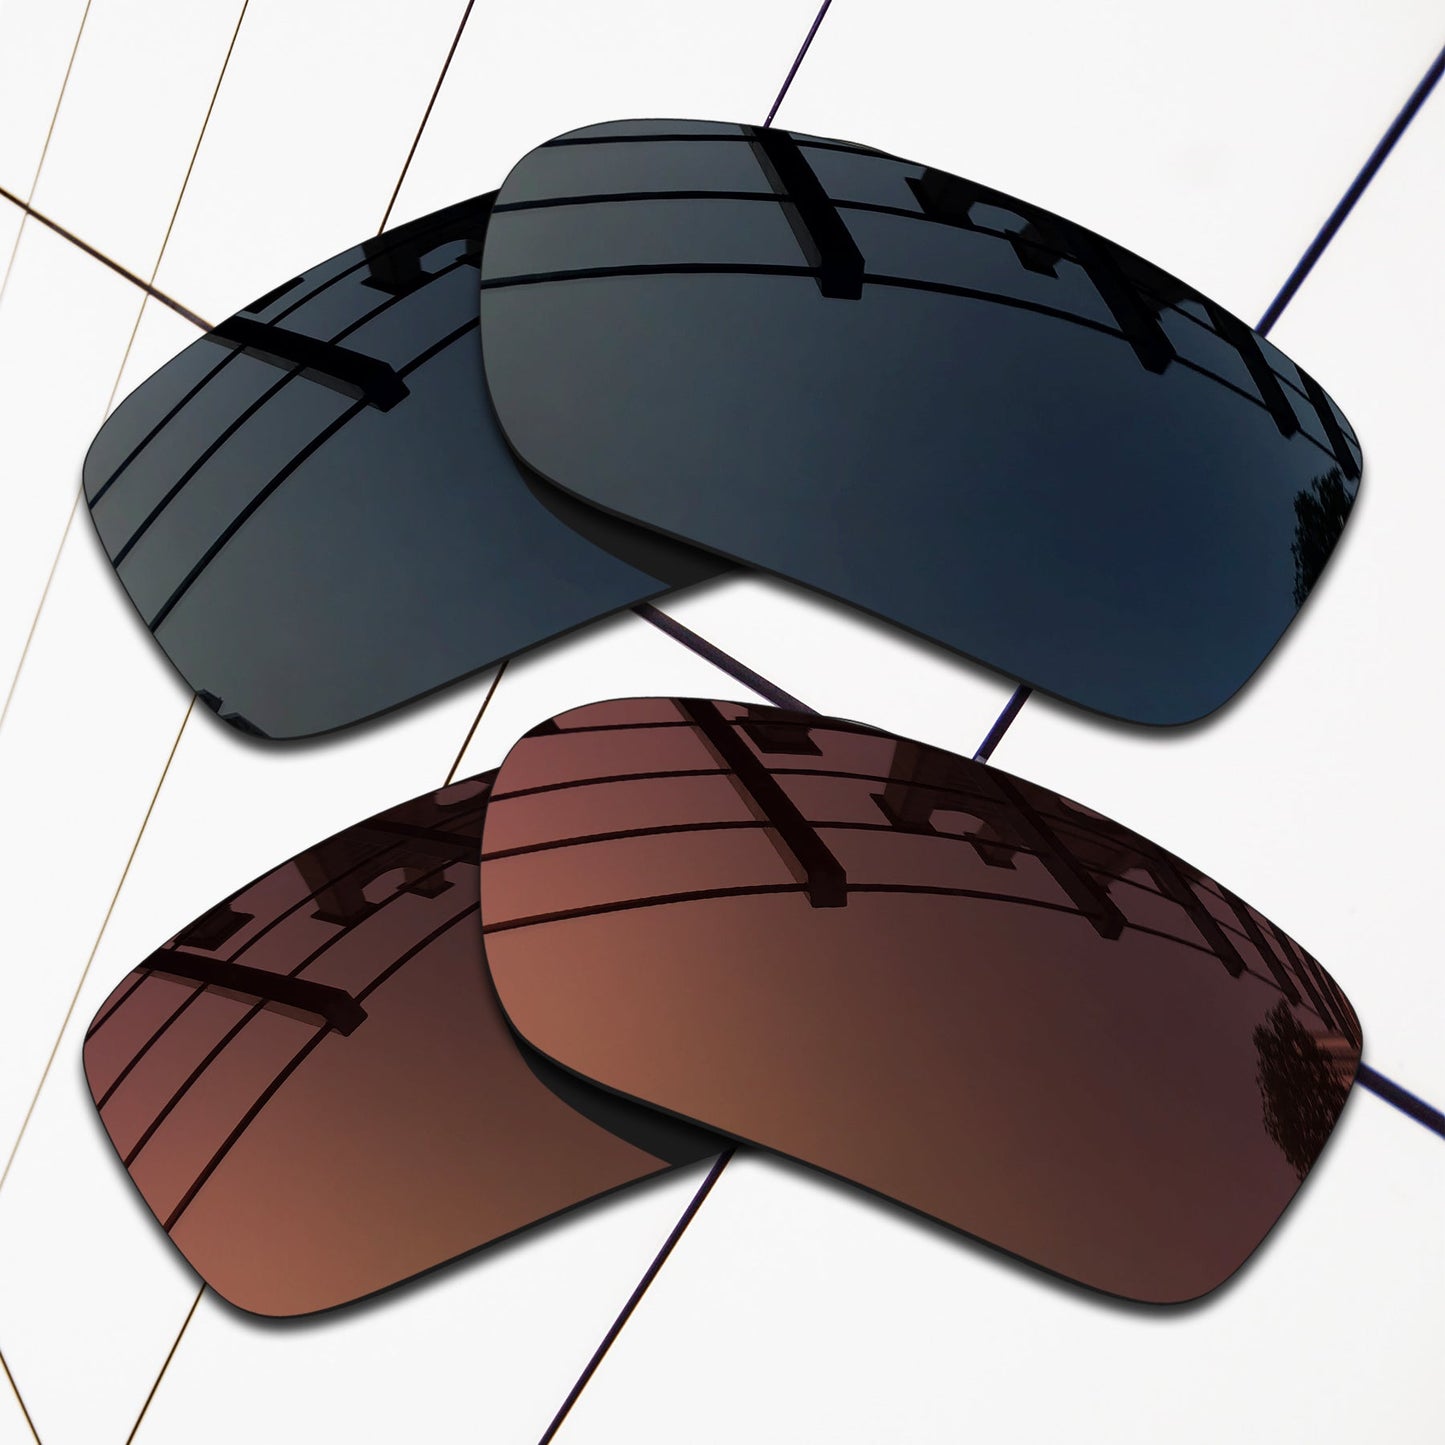 Polarized Replacement Lenses for Oakley Si Ballistic Det Cord Sunglasses